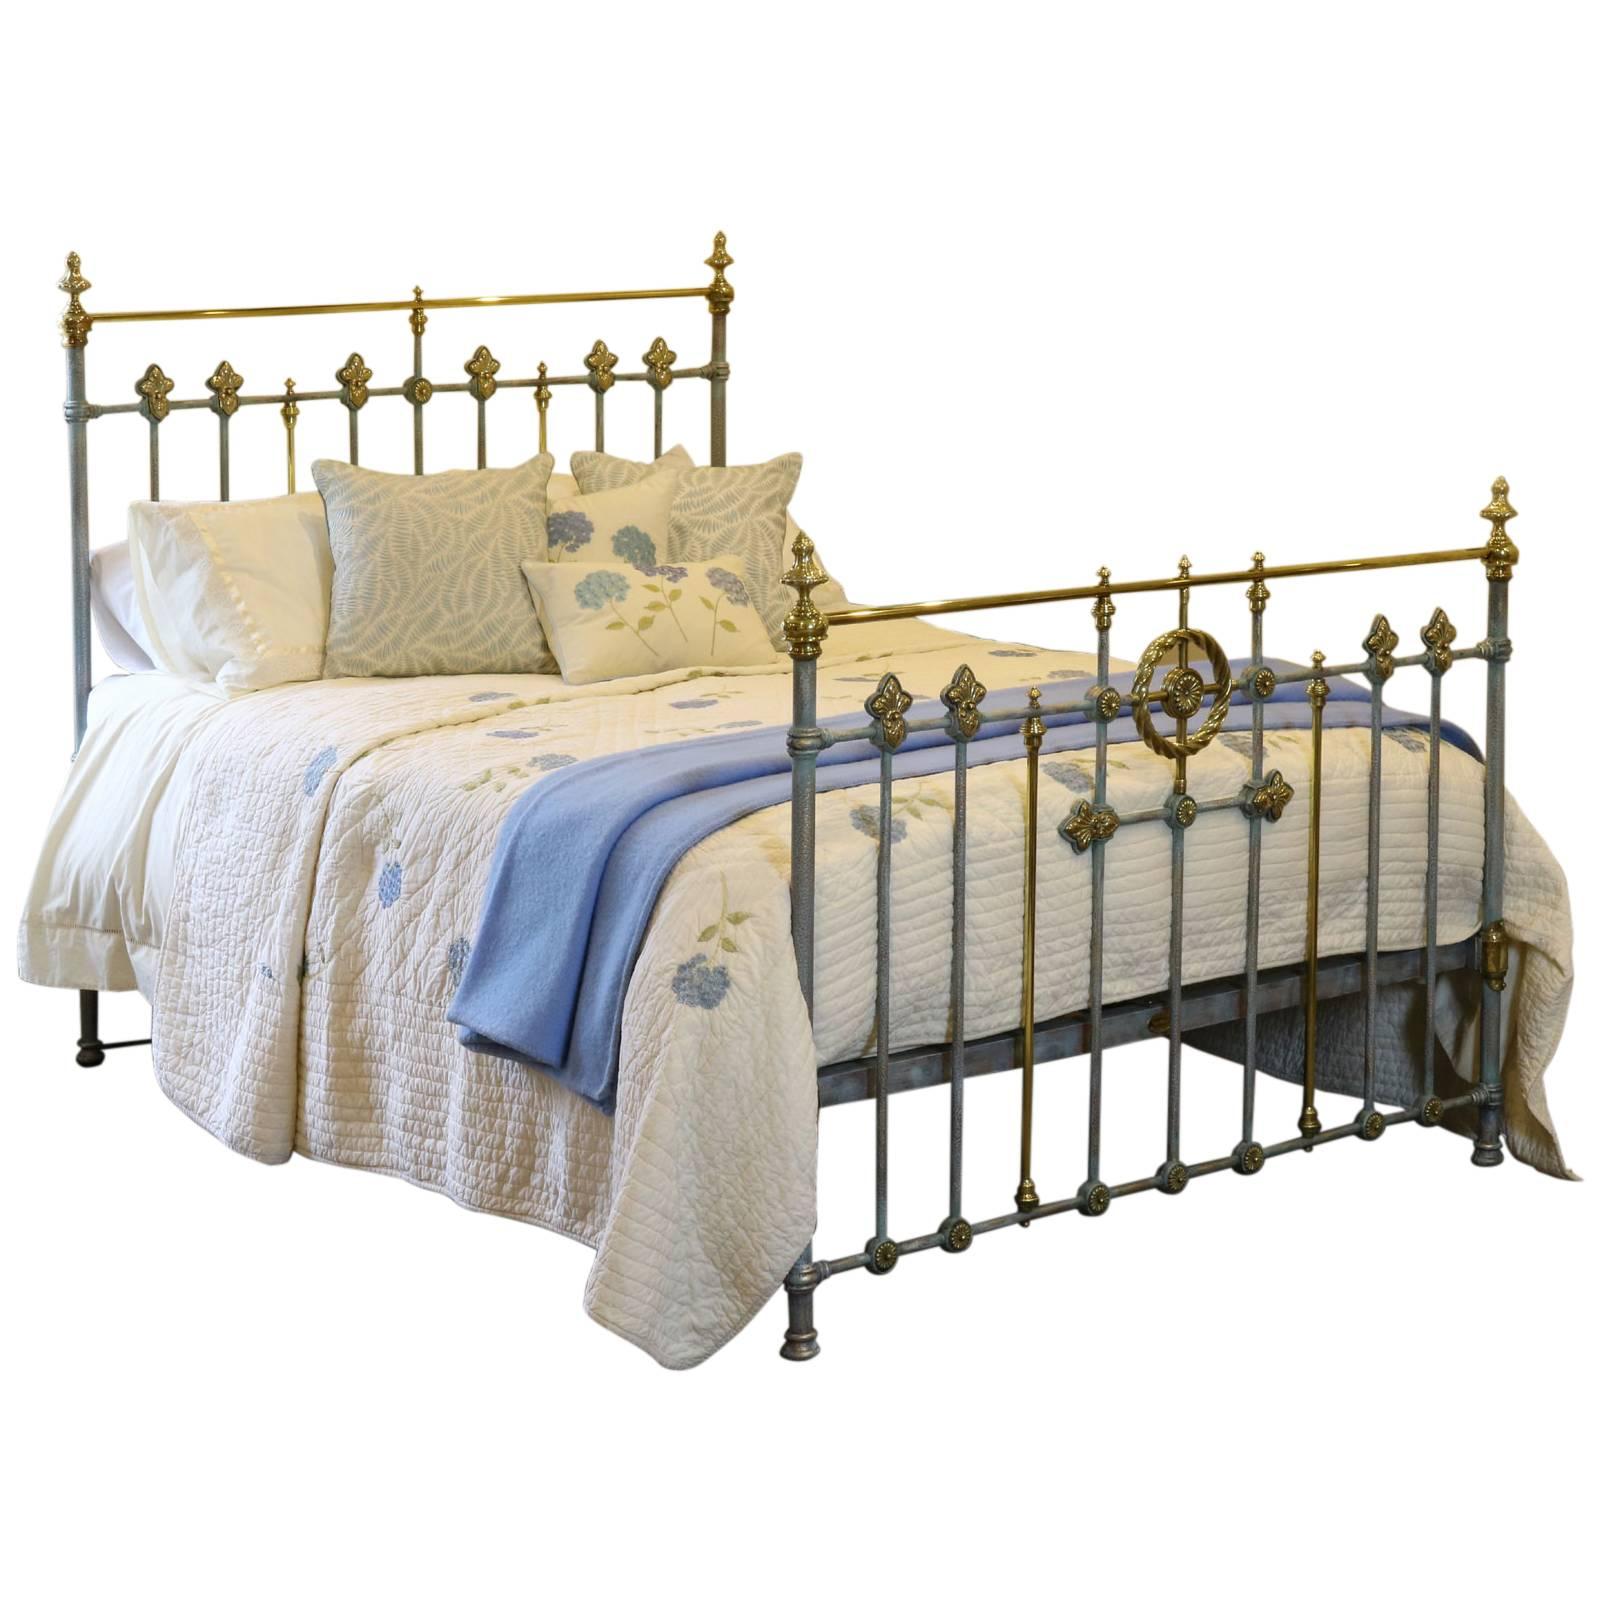 Blue Verdigris Decorative Brass and Iron Bed